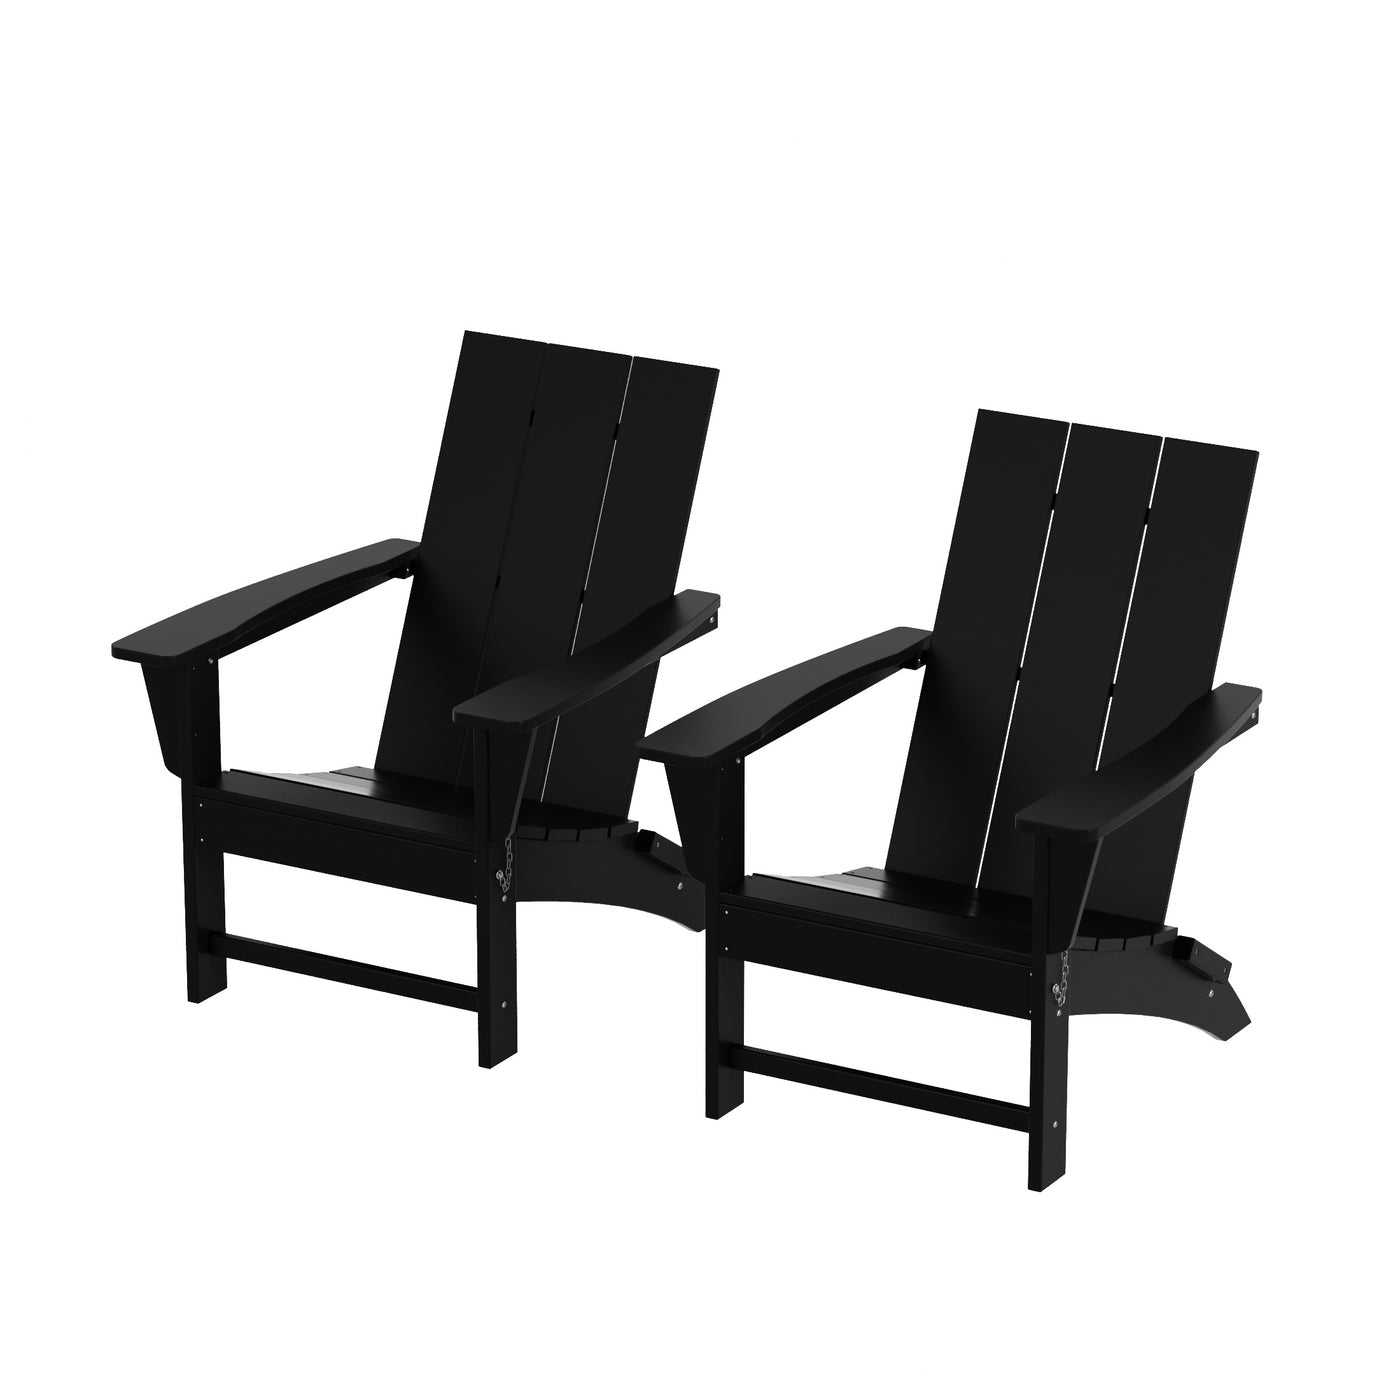 Ashore Modern Outdoor Folding Adirondack Chair (Set of 2)